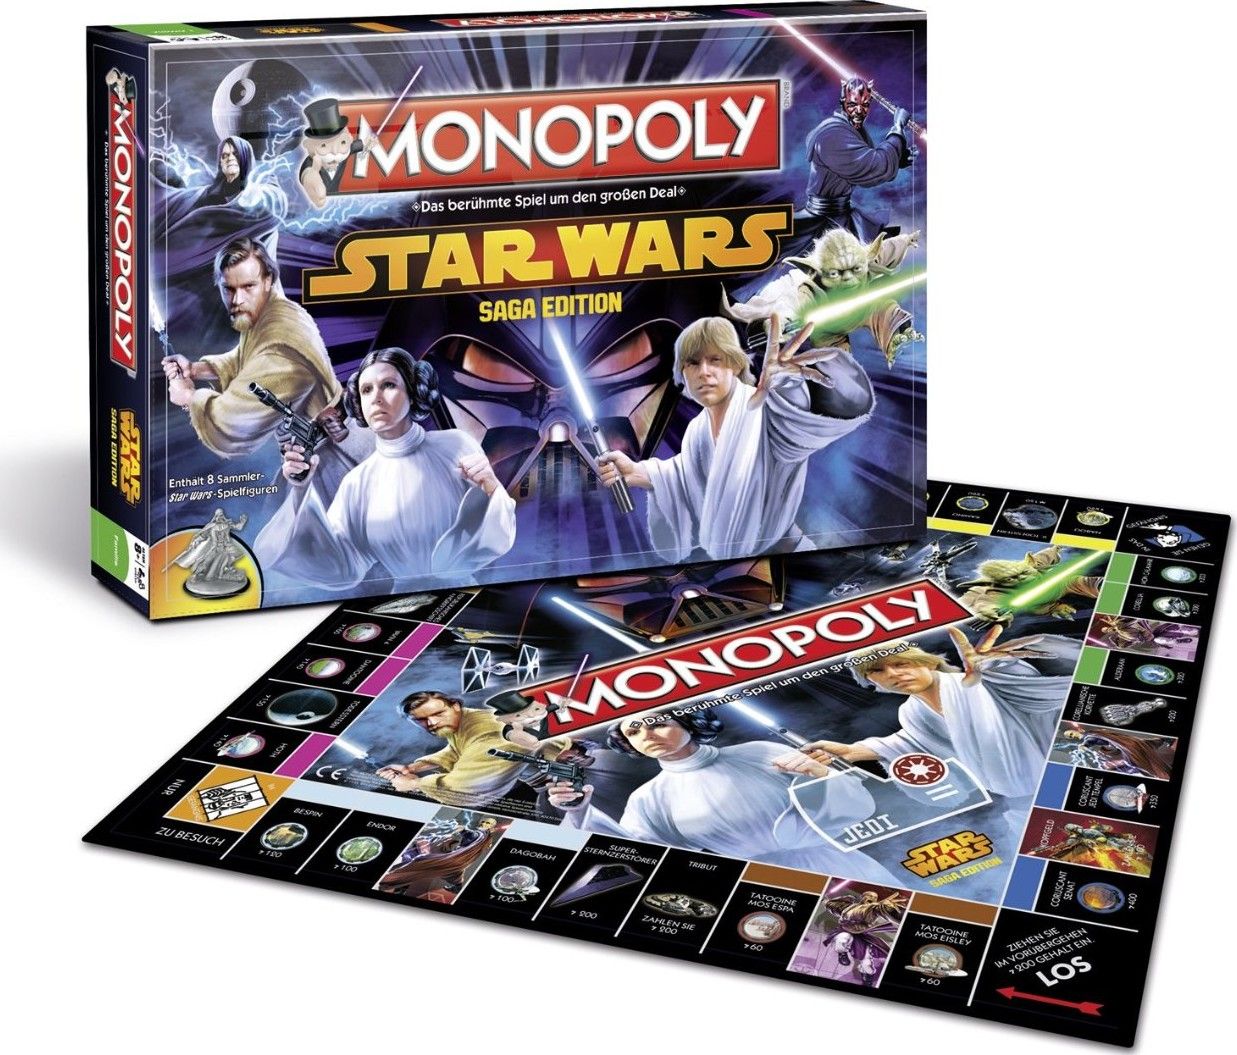 star wars monopoly saga edition manual